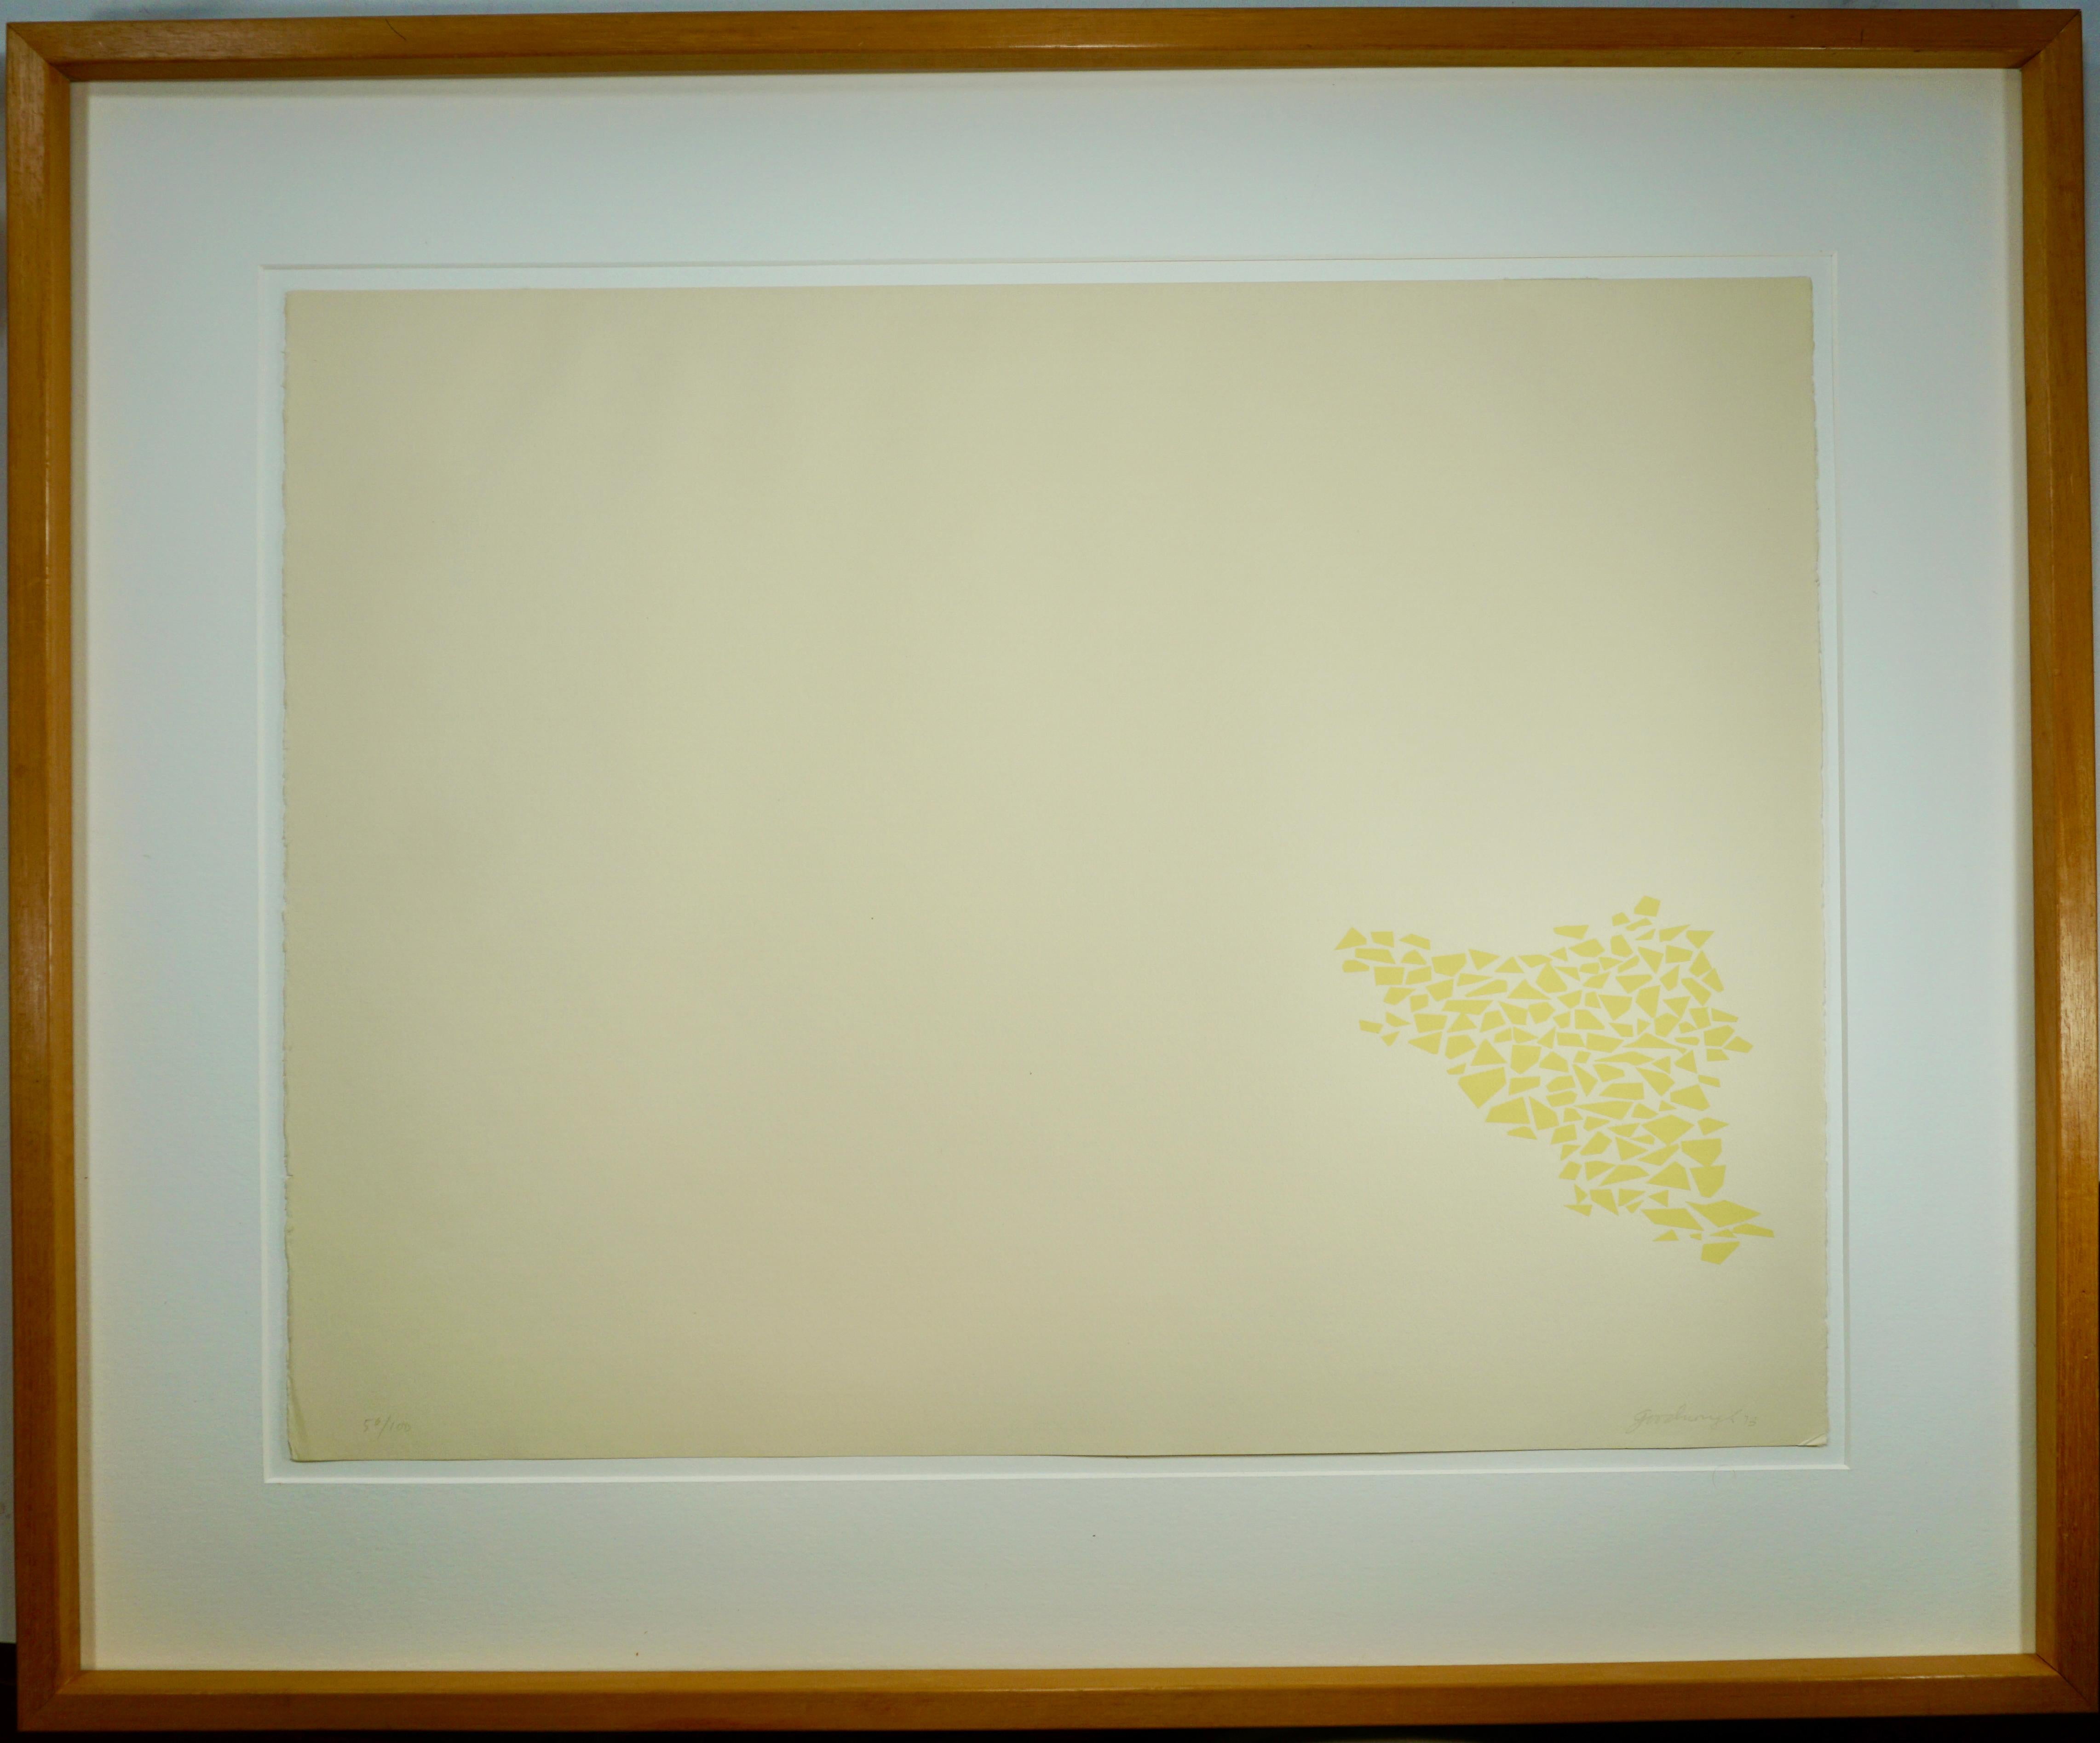 Robert Arthur Goodnough Abstract Print - Yellow on Beige 